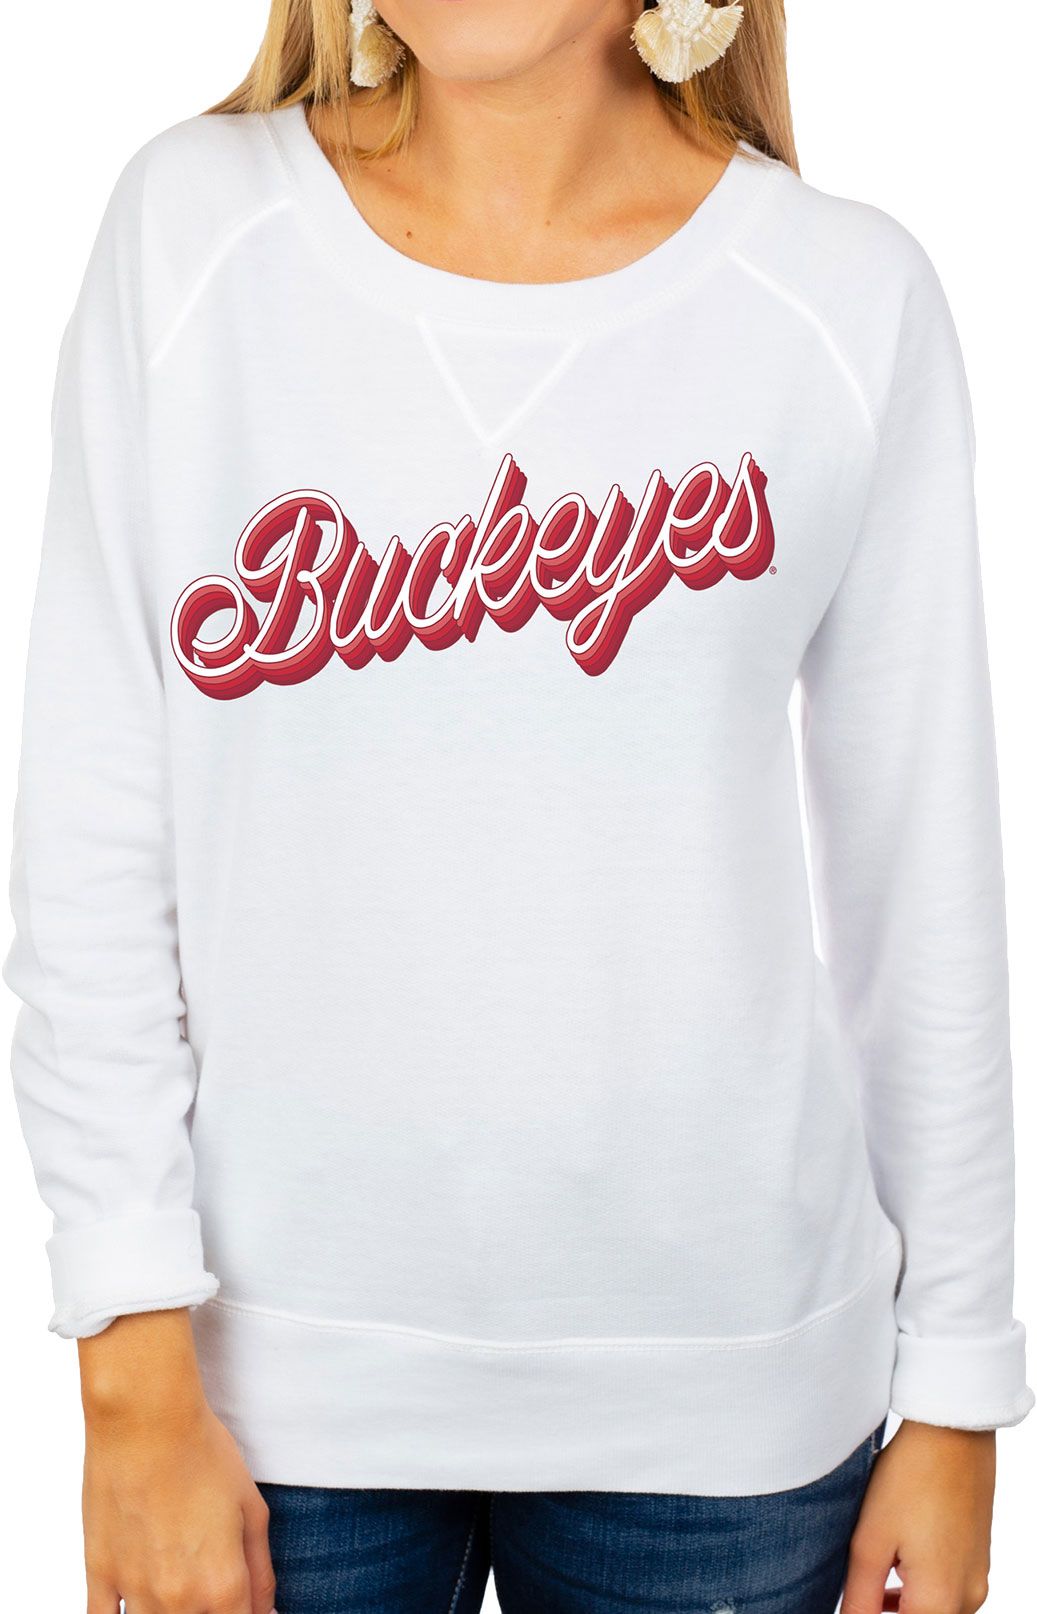 ohio state buckeyes women's sweatshirt